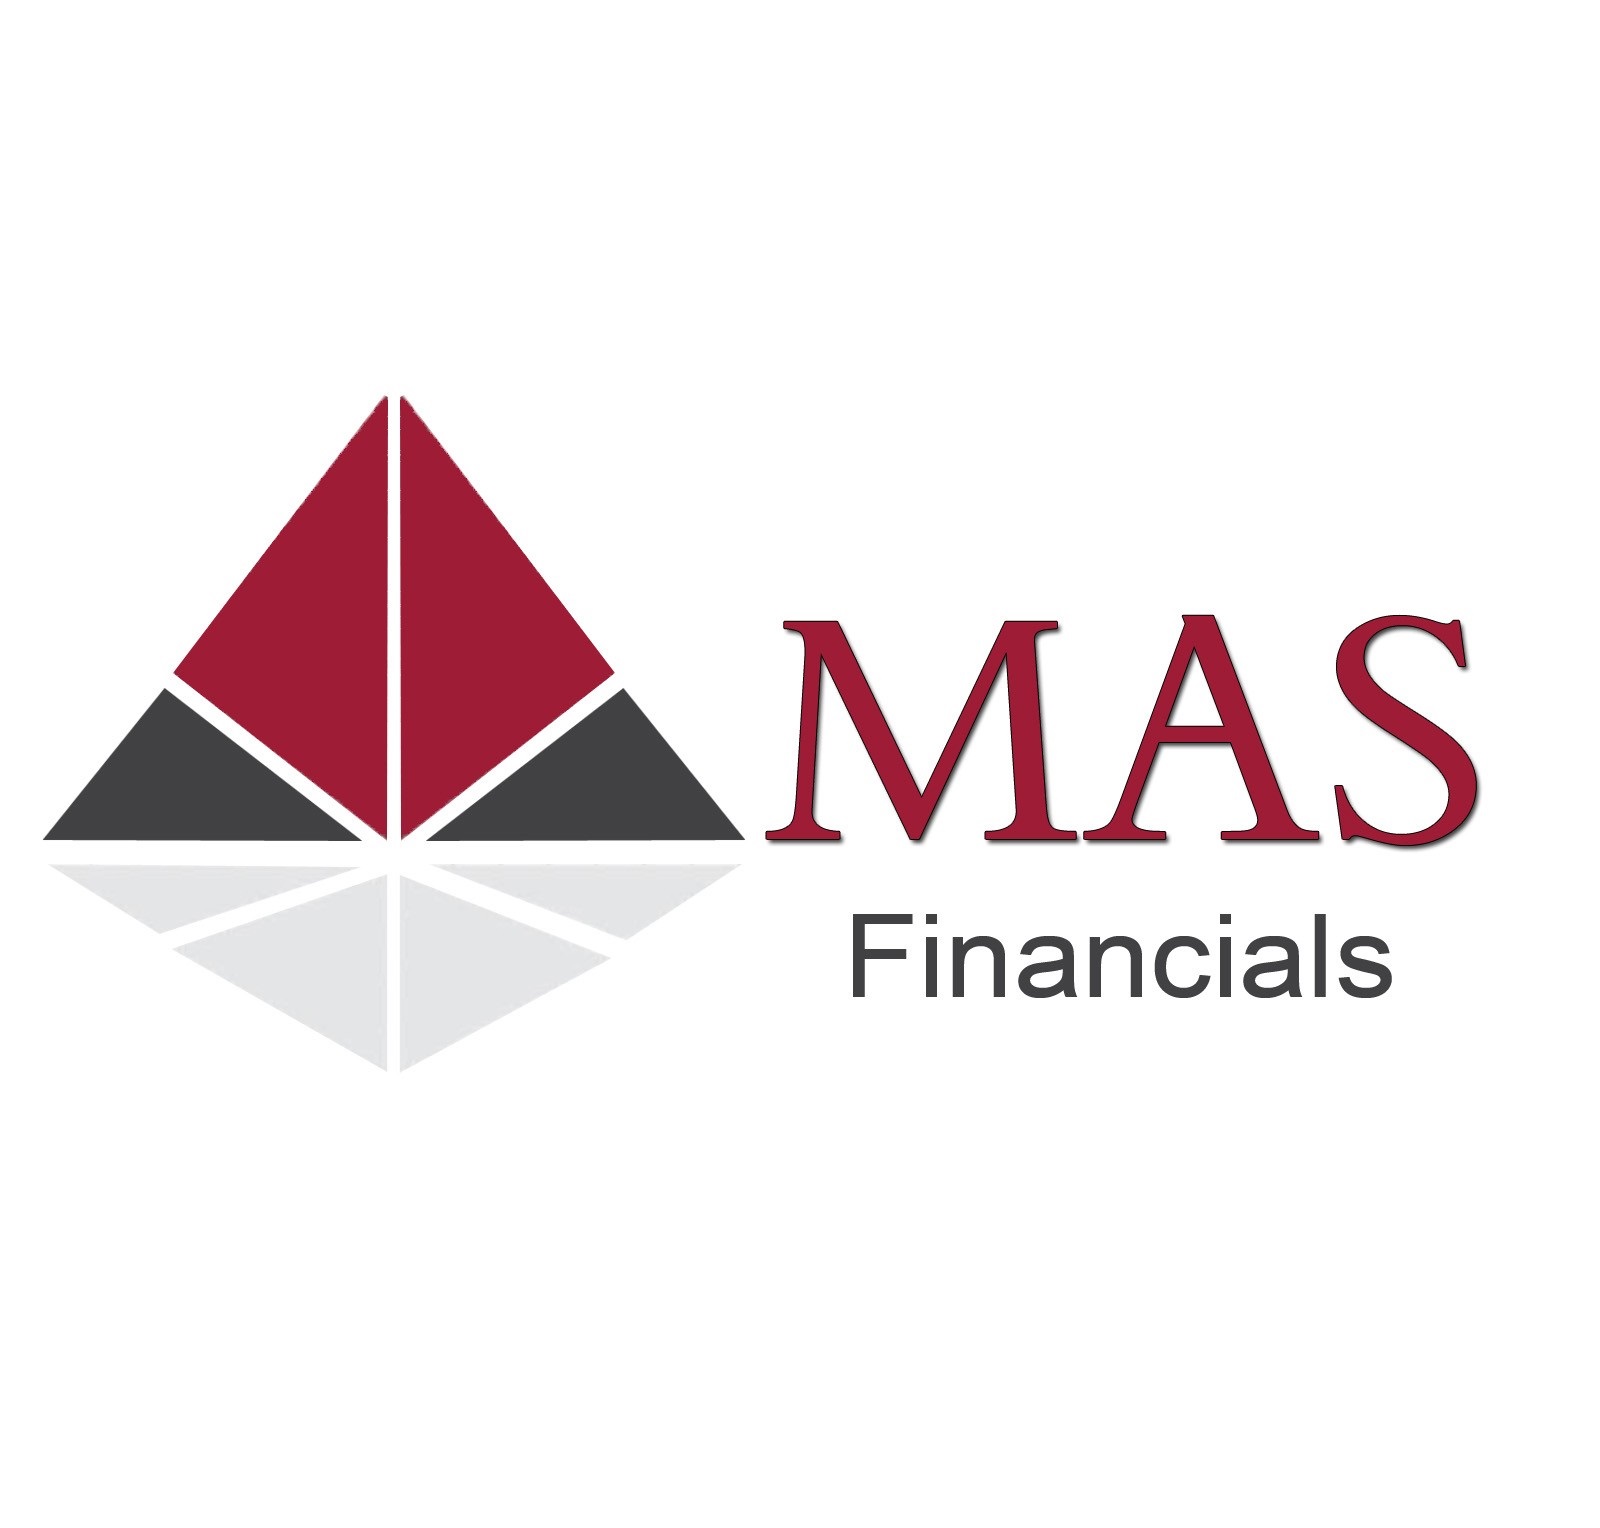 Mas Financials company